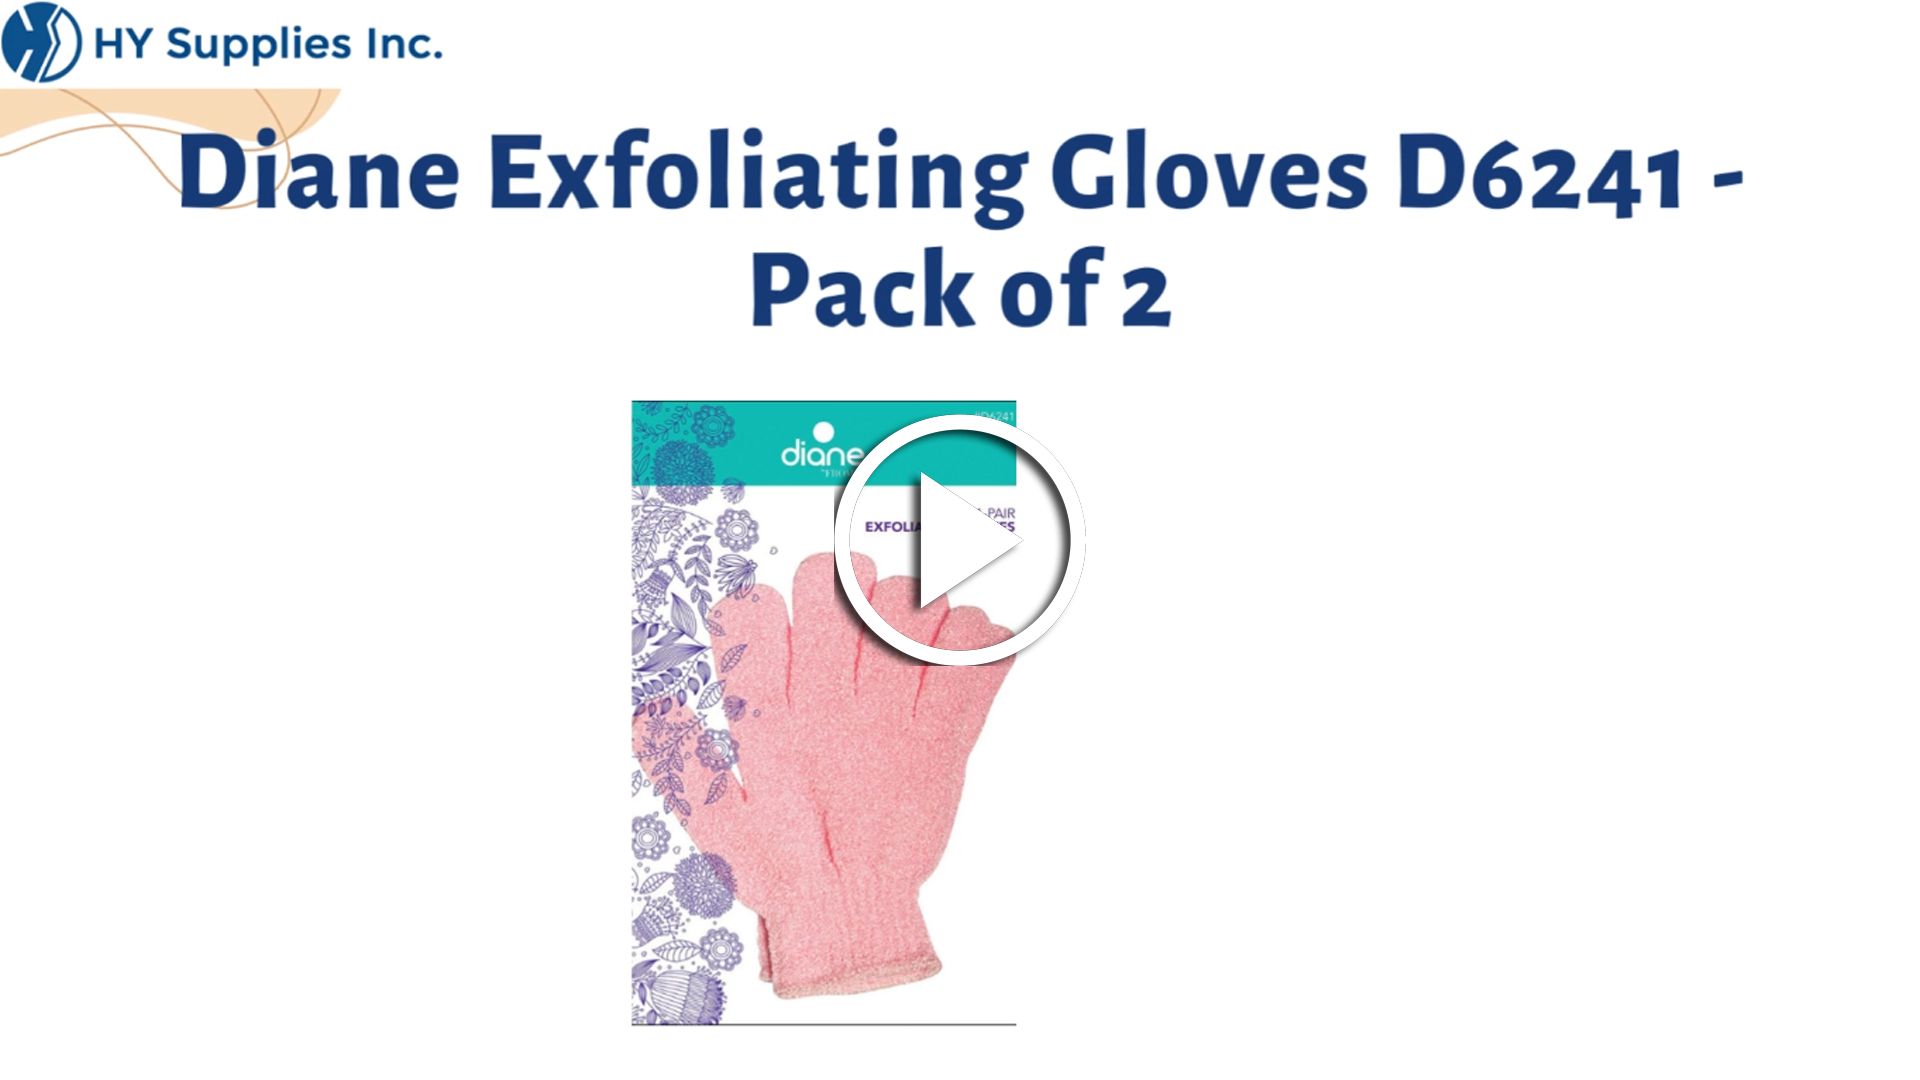 Diane Exfoliating Gloves D6241 - Pack of 2